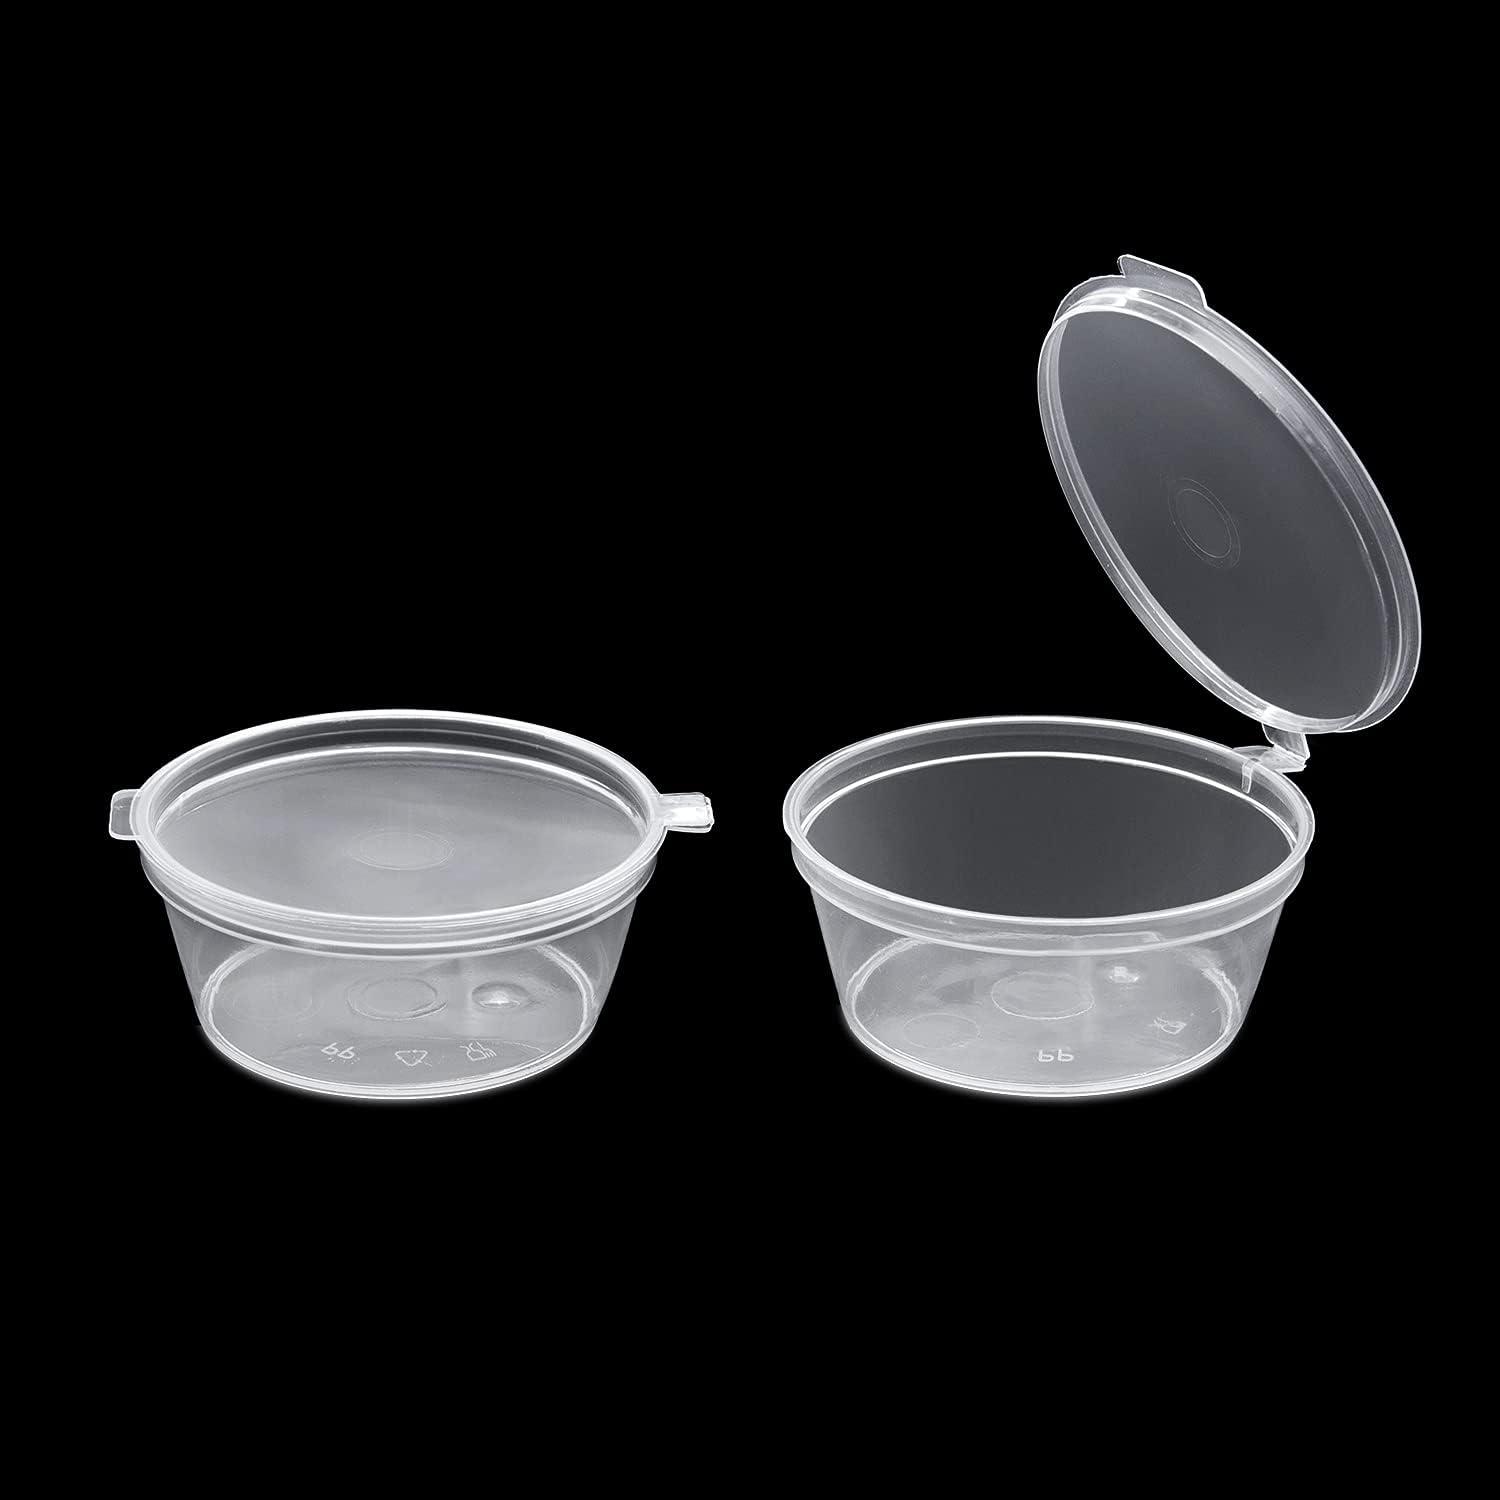 2 oz - 100 Sets Black Diposable Plastic Portion Cups With Lids